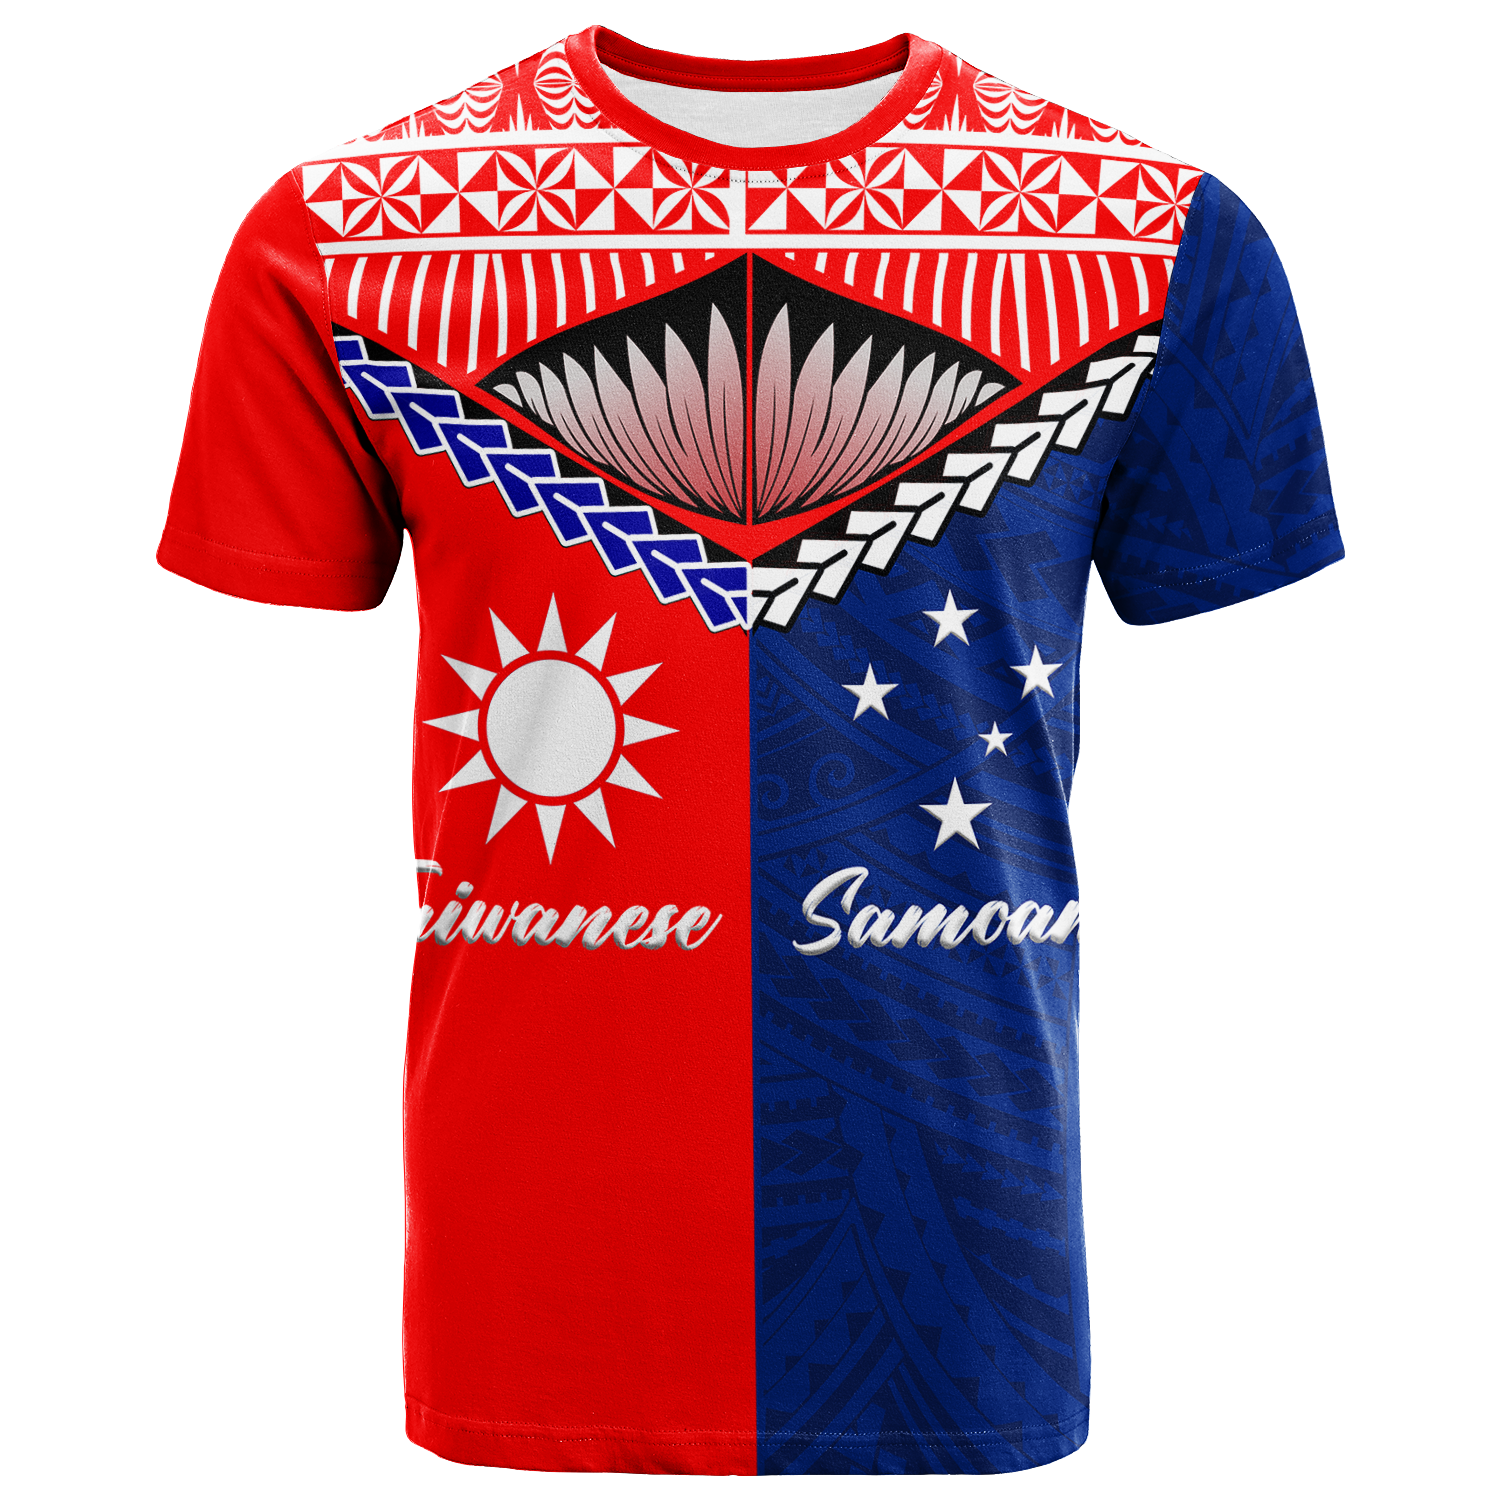 Taiwanese Combine Samoan Pride T Shirt LT12